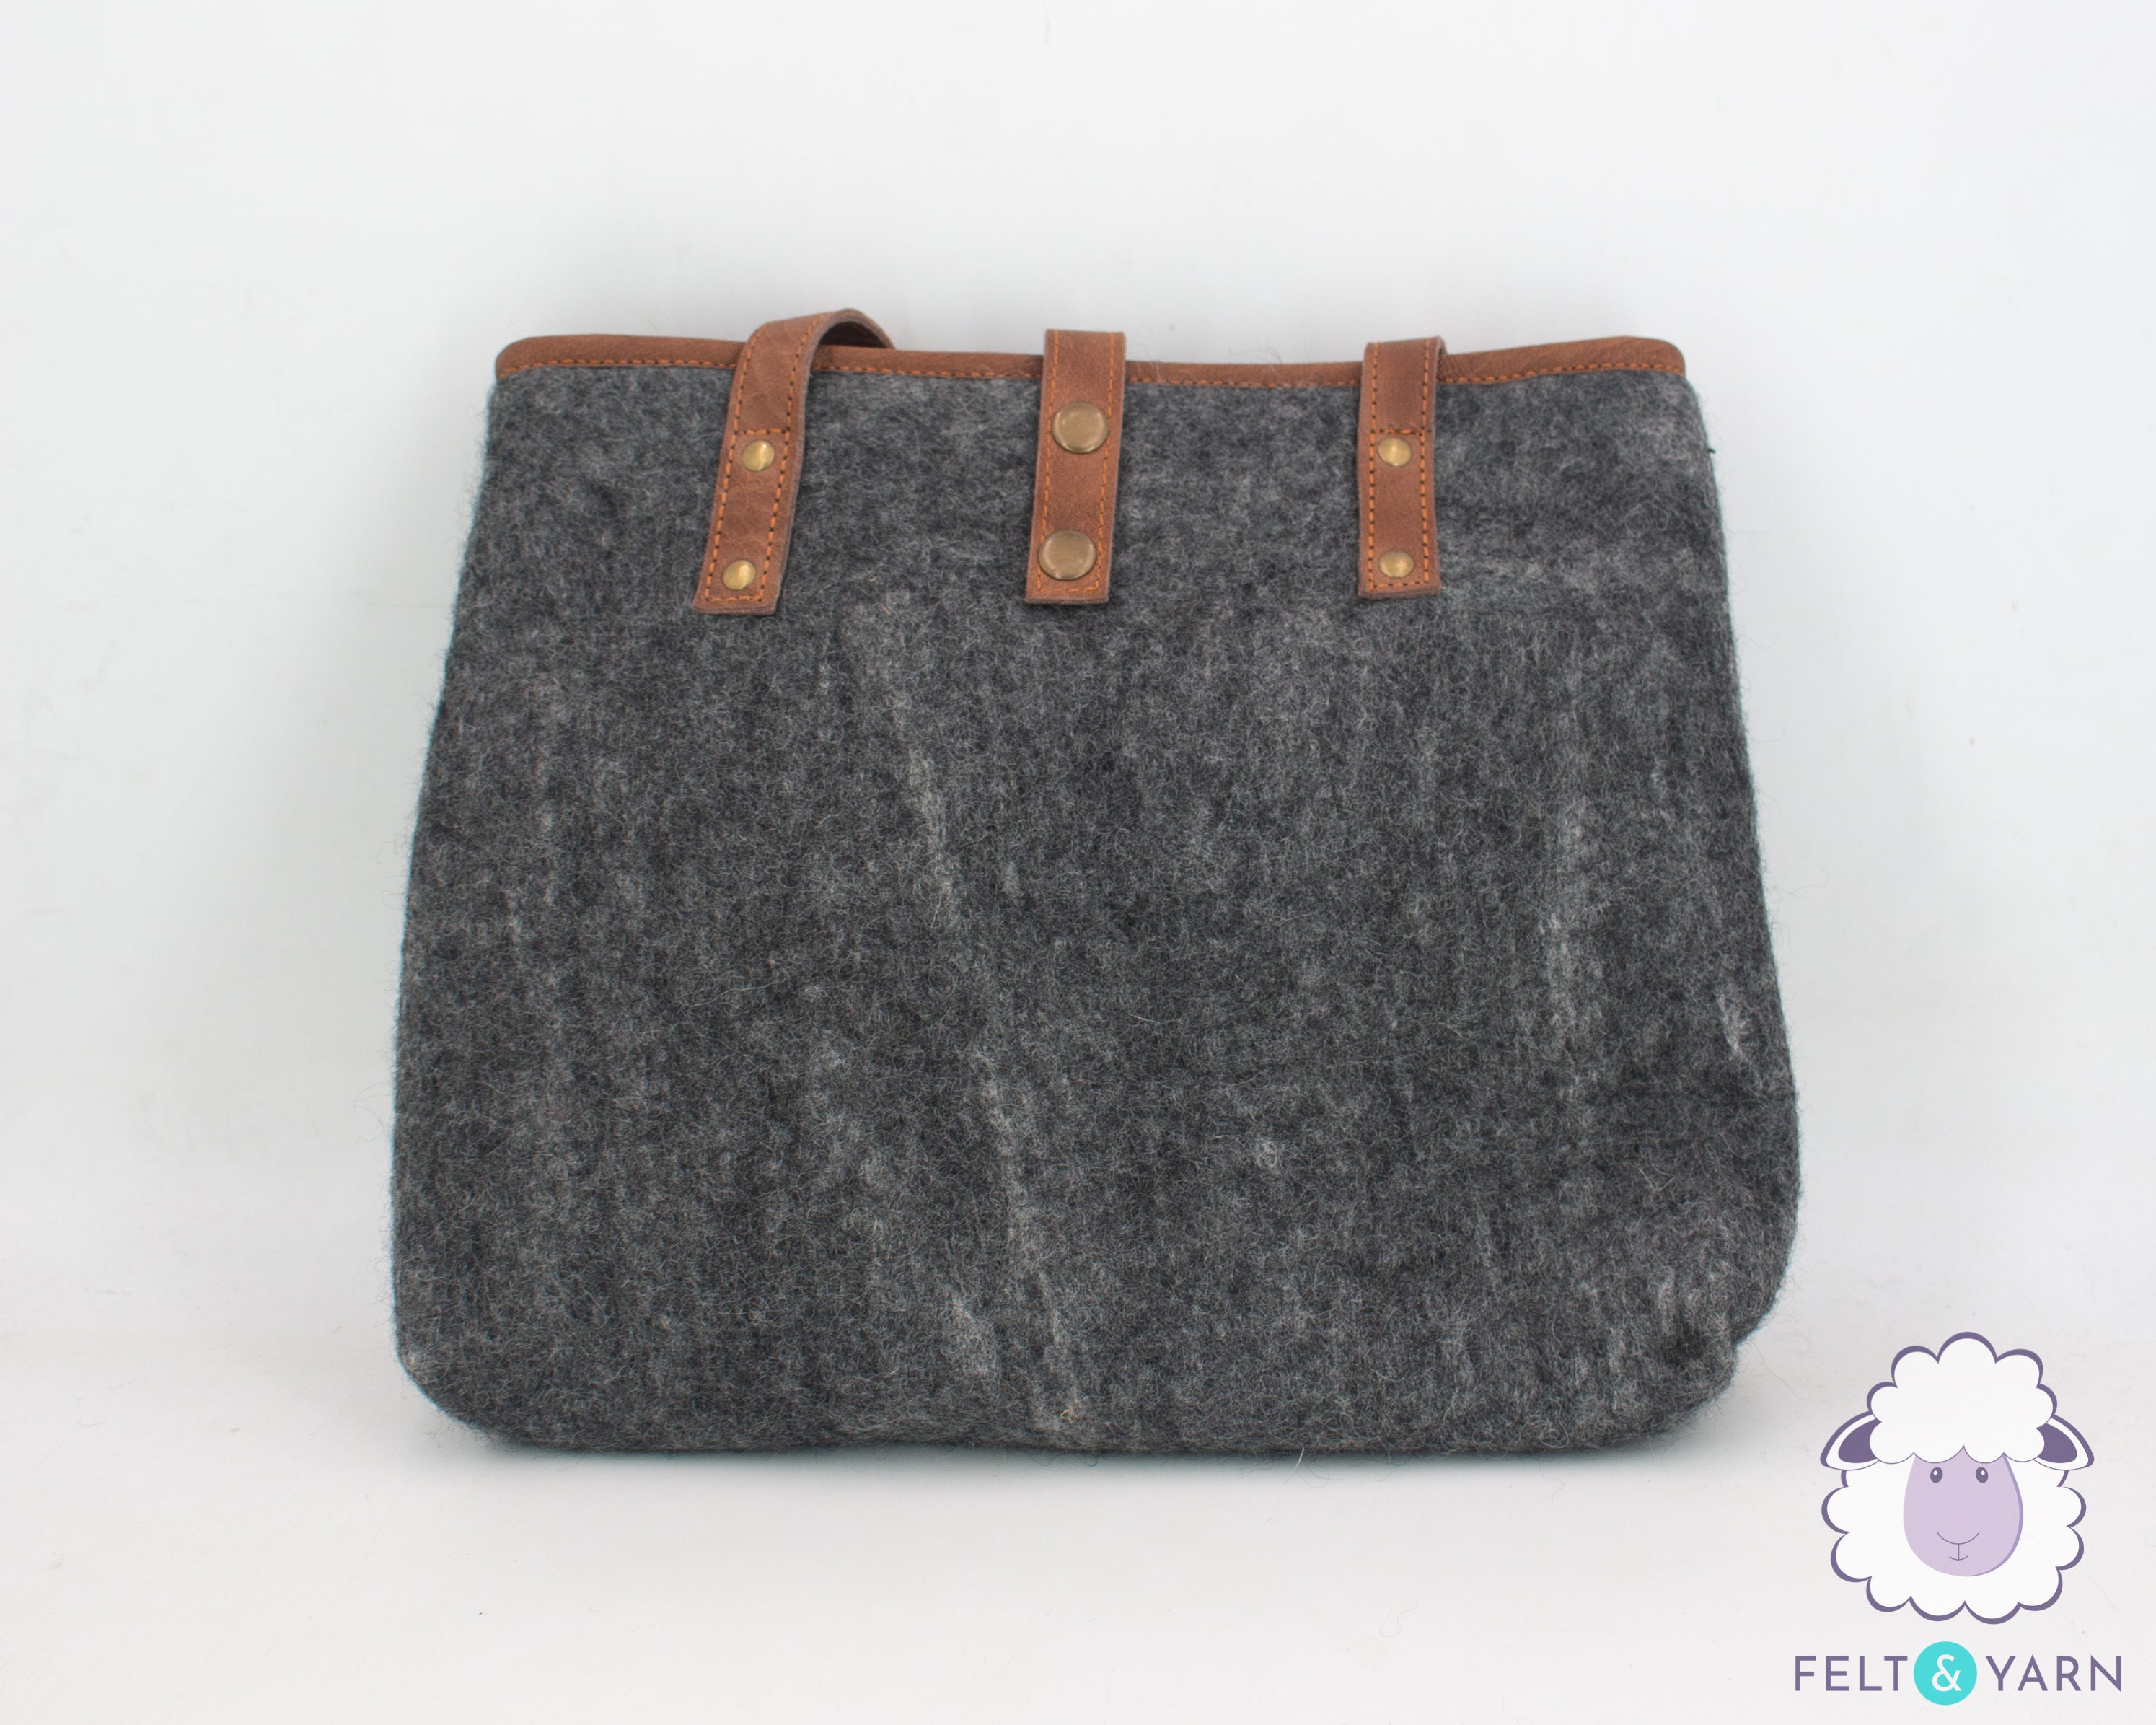 36x30cm Felt Bag With Leather & Zipper Satchel Pattern Fair Trade Ethically Handmade